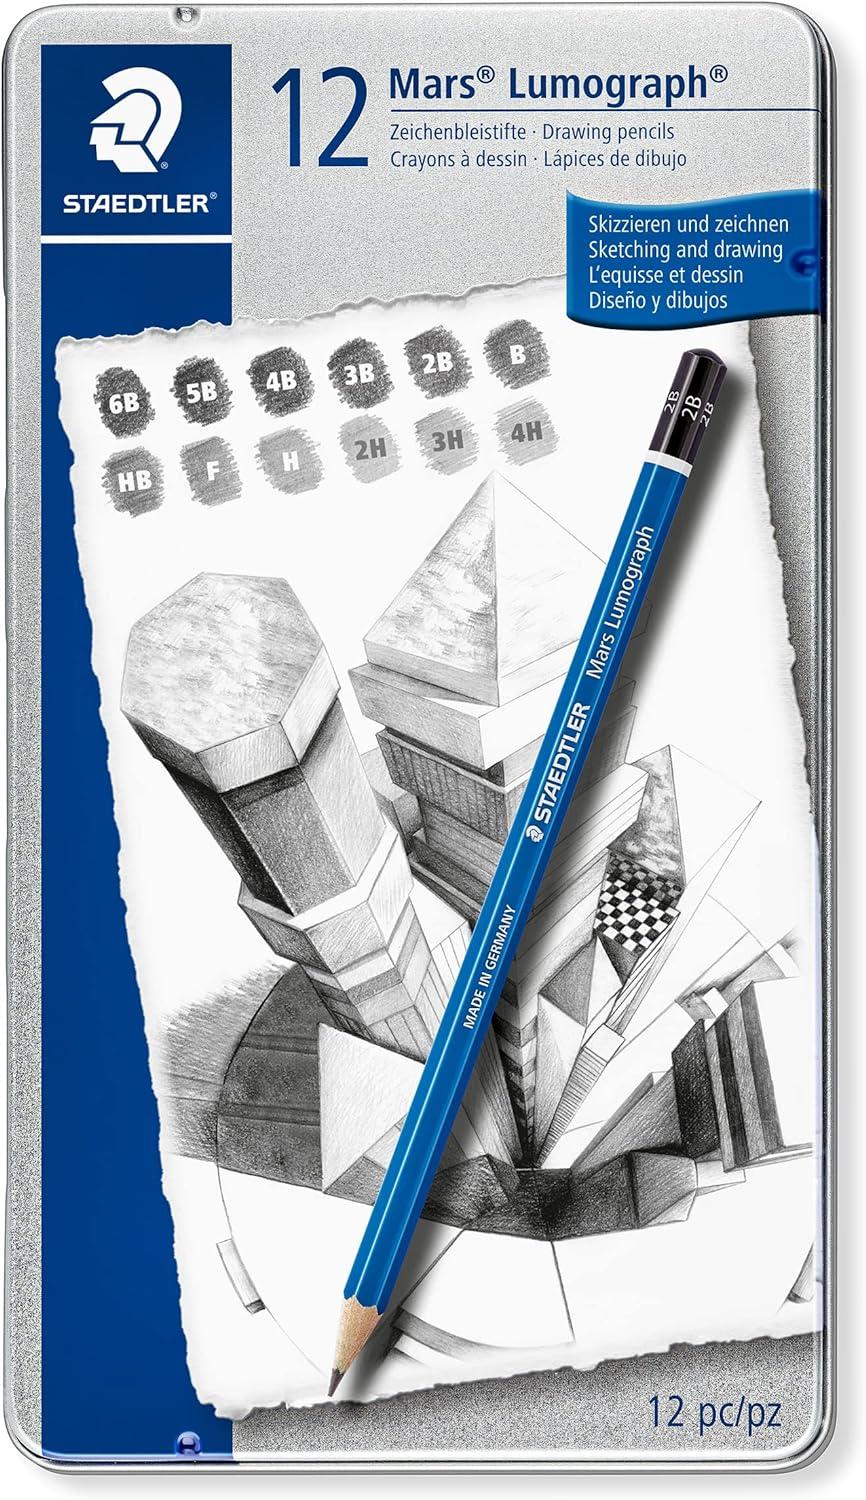 ?staedtler mars lumograph art drawing pencils 12 pack graphite pencils in metal case break-resistant bonded